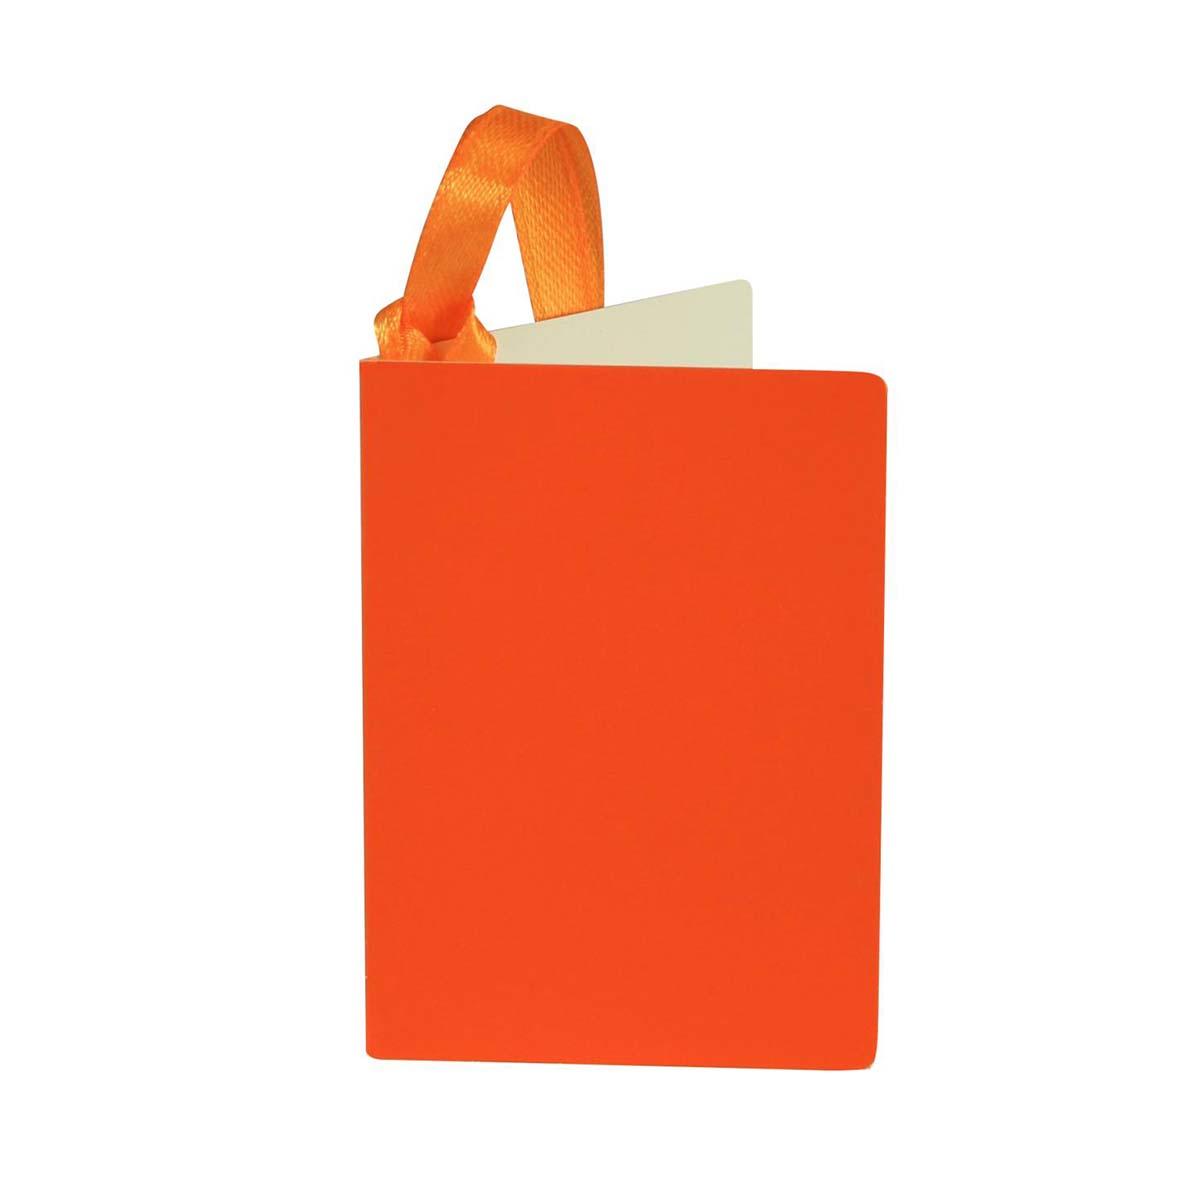 Orange Gift Tag Displayed In Full